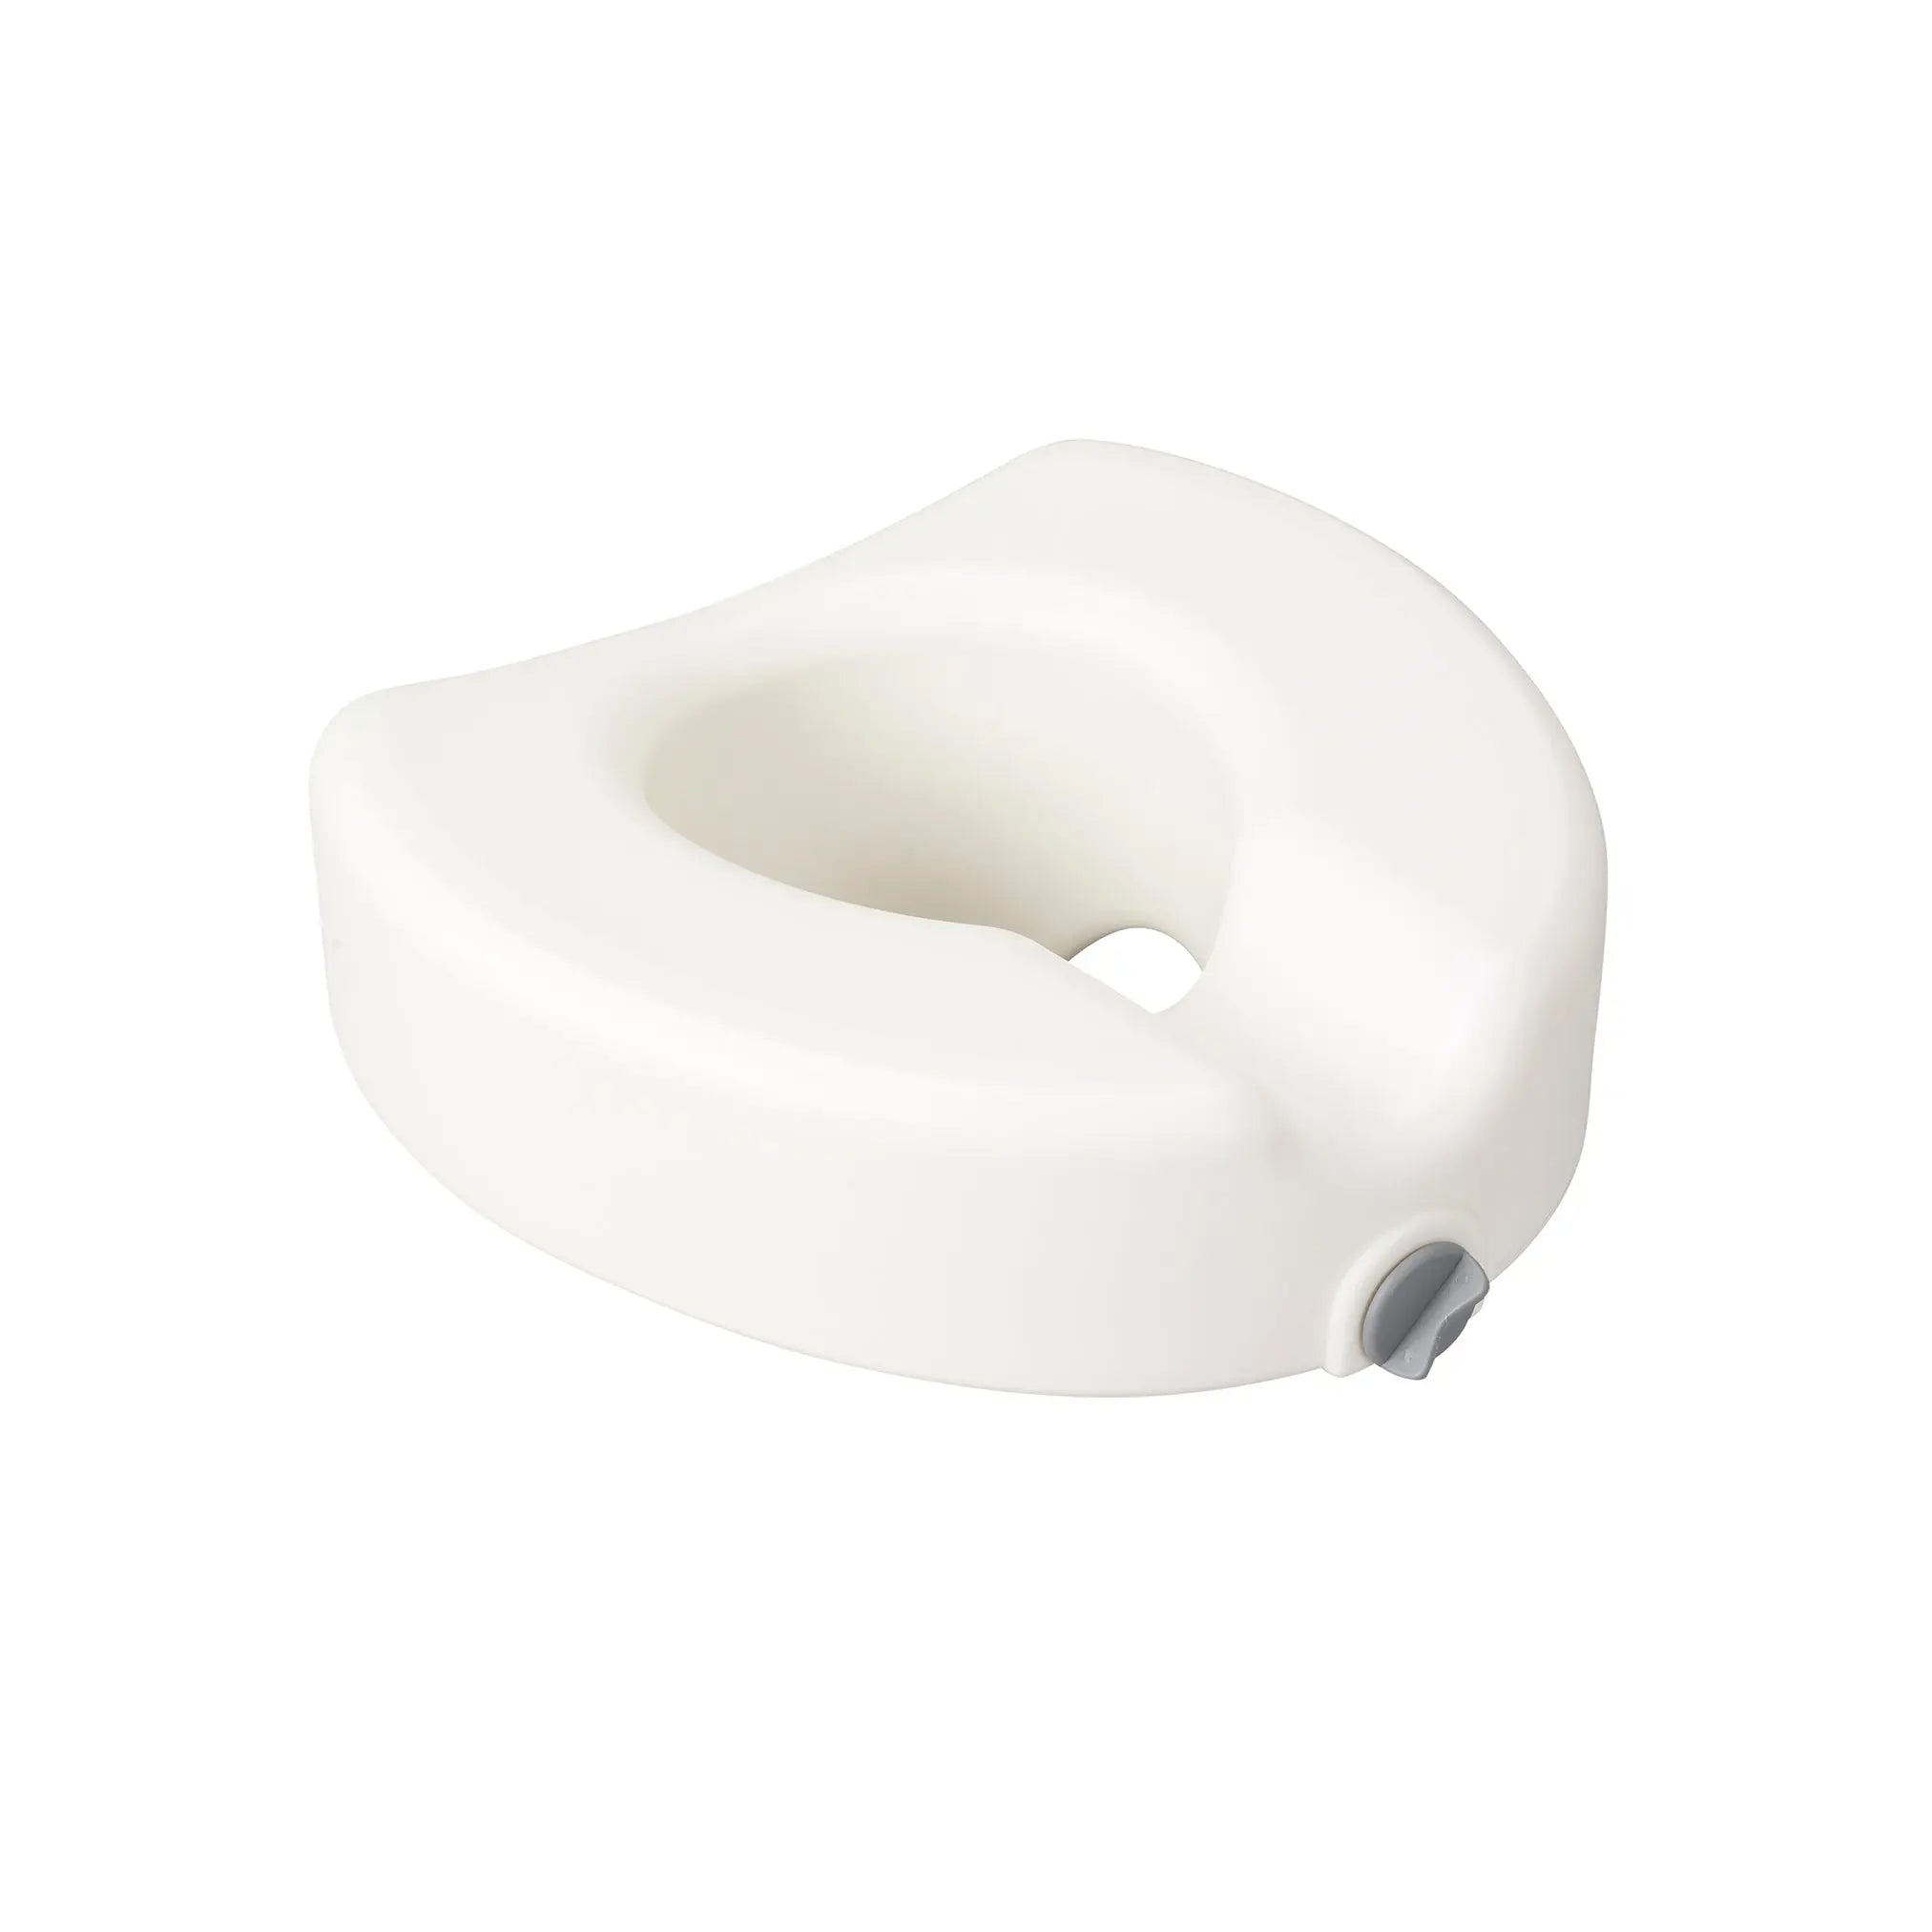 Premium Plastic Raised Toilet Seat with Lock, Elongated - Home Health Store Inc